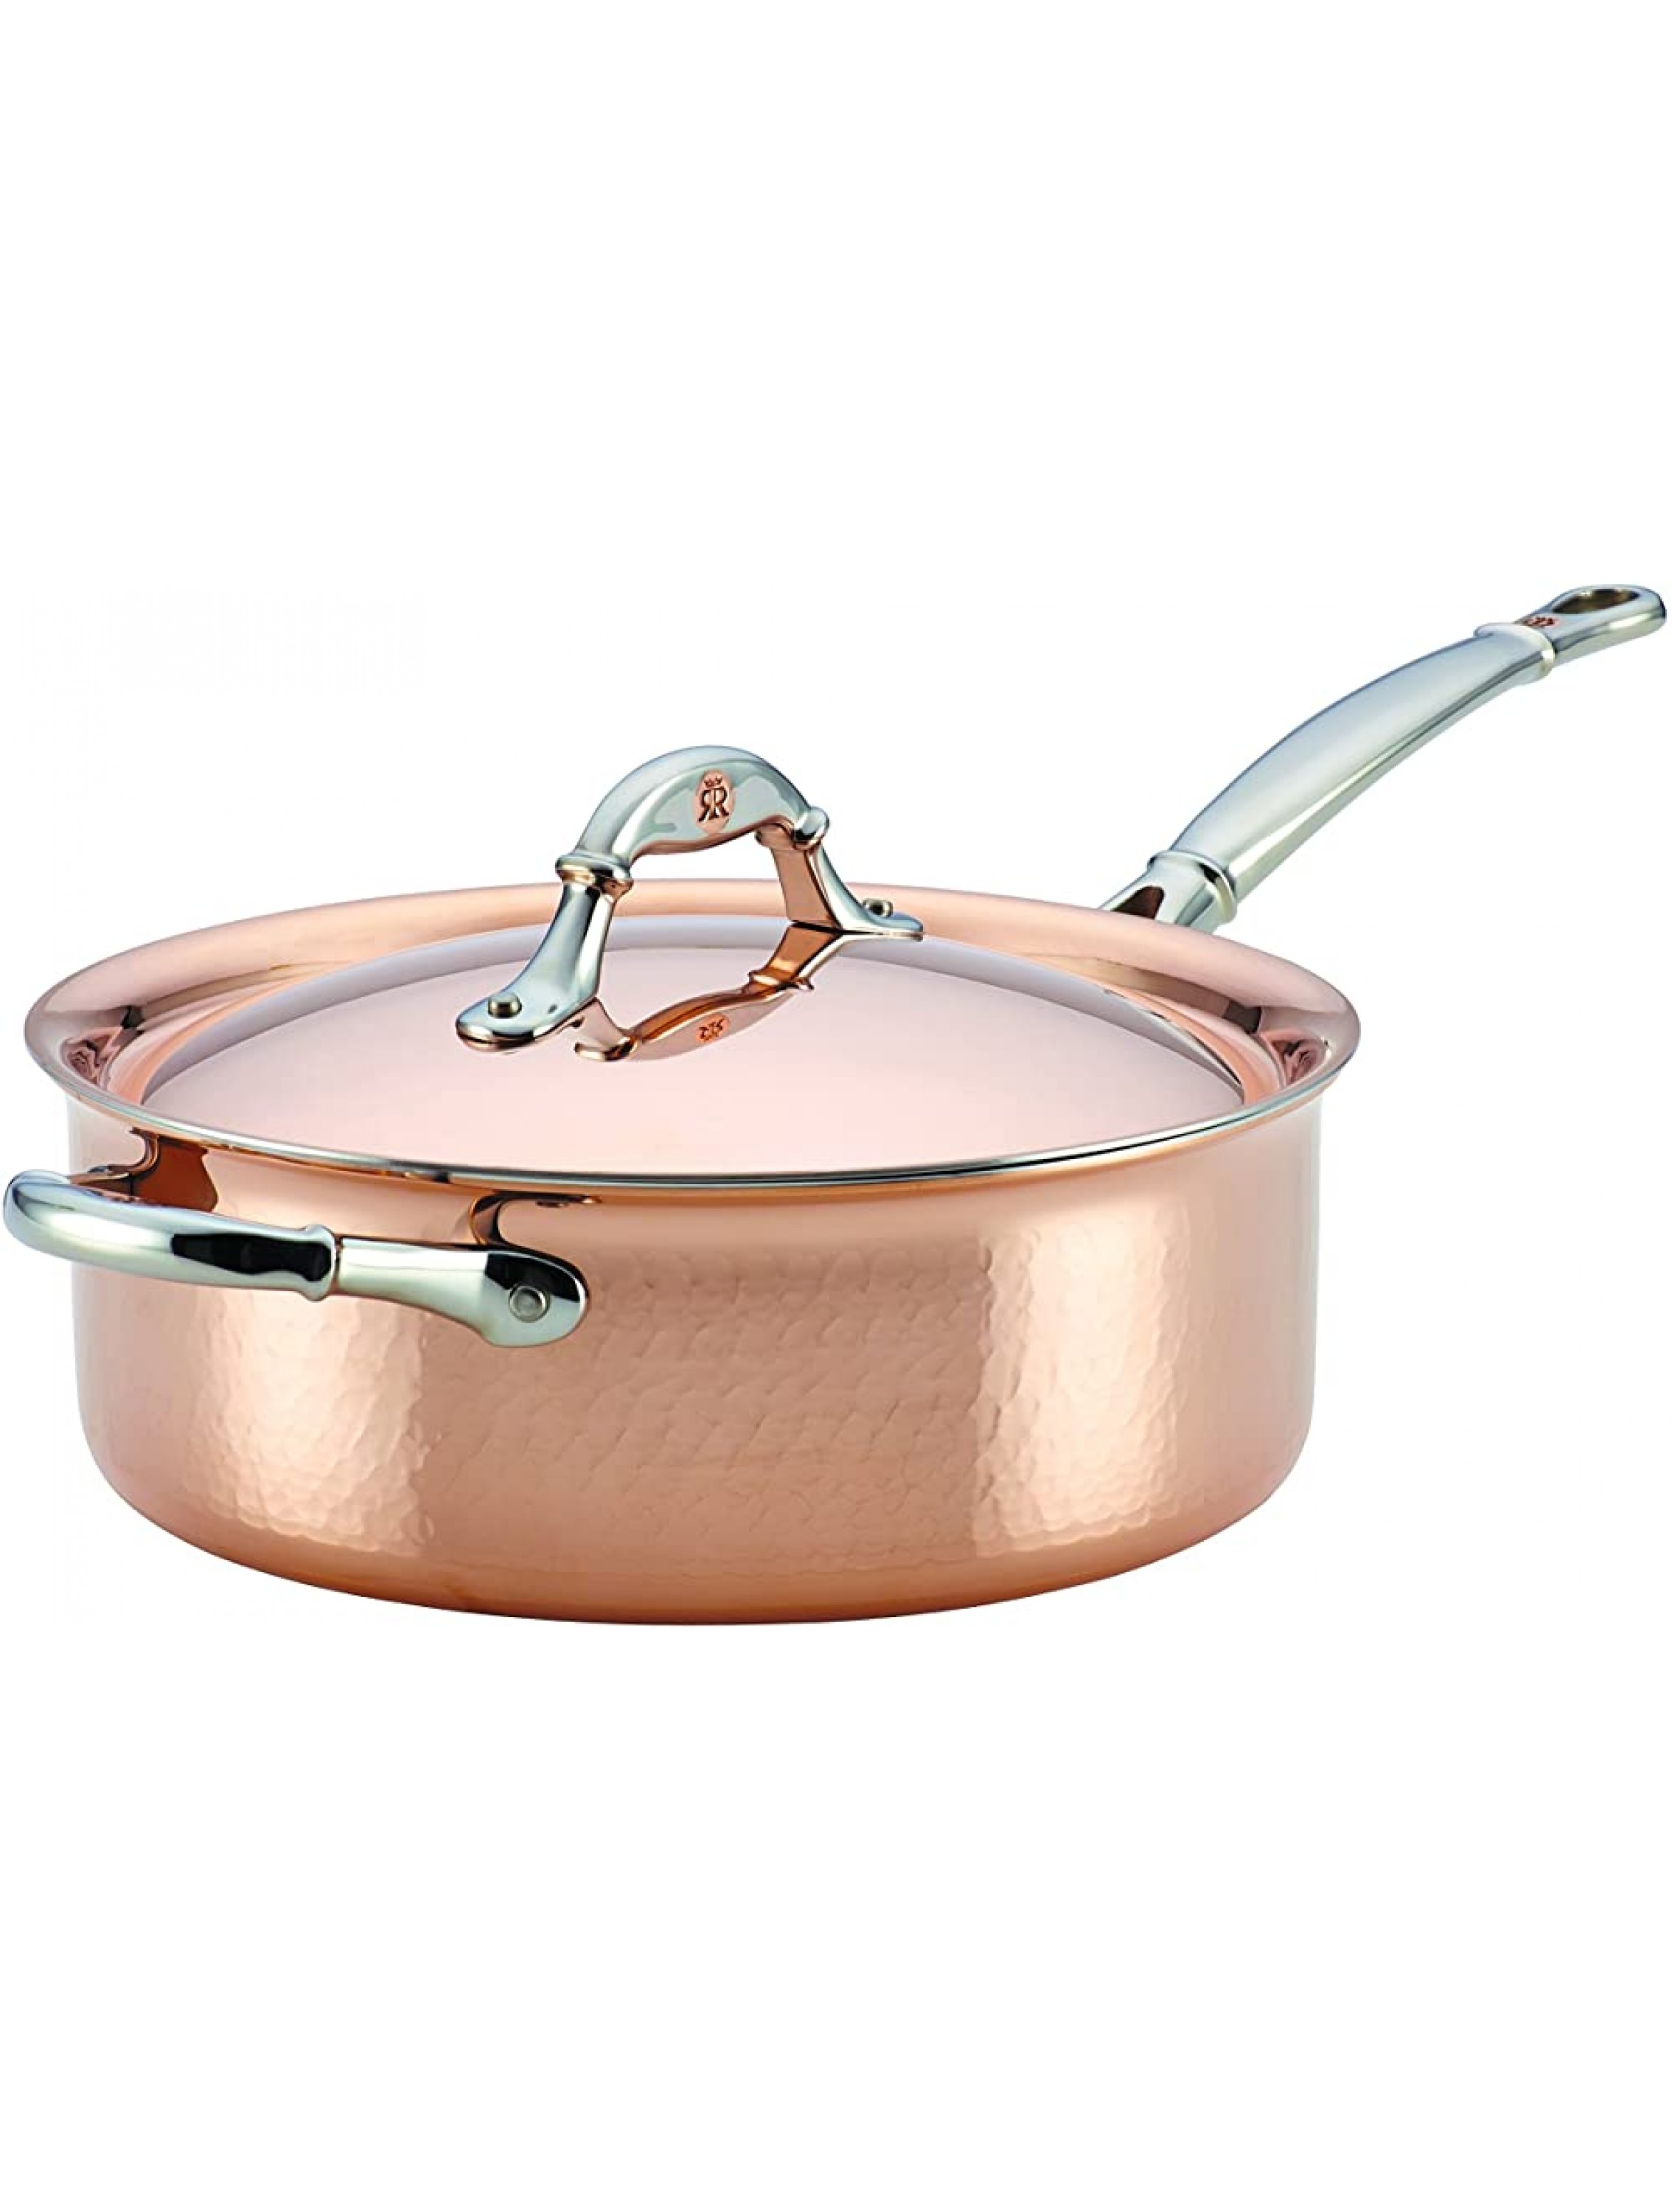 Ruffoni Symphonia Cupra Triply Copper Stainless Steel Saute Pan Frying Pan with helper handle 4 Quart Brown - B9NJ5QD1E